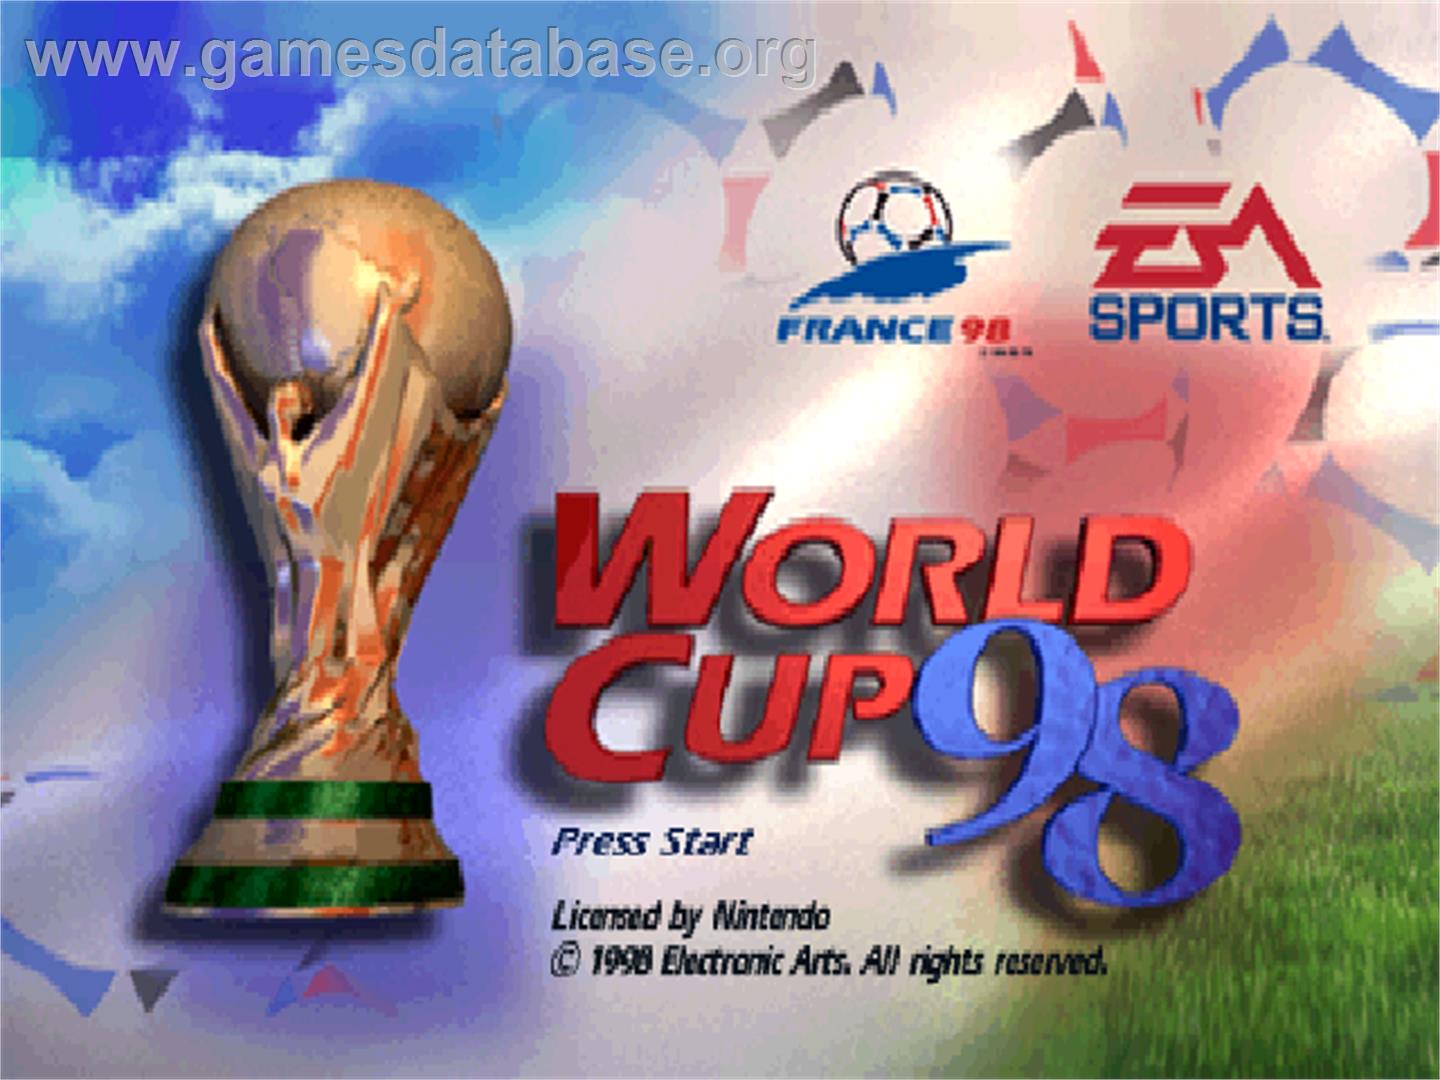 World Cup 98 - Nintendo N64 - Artwork - Title Screen